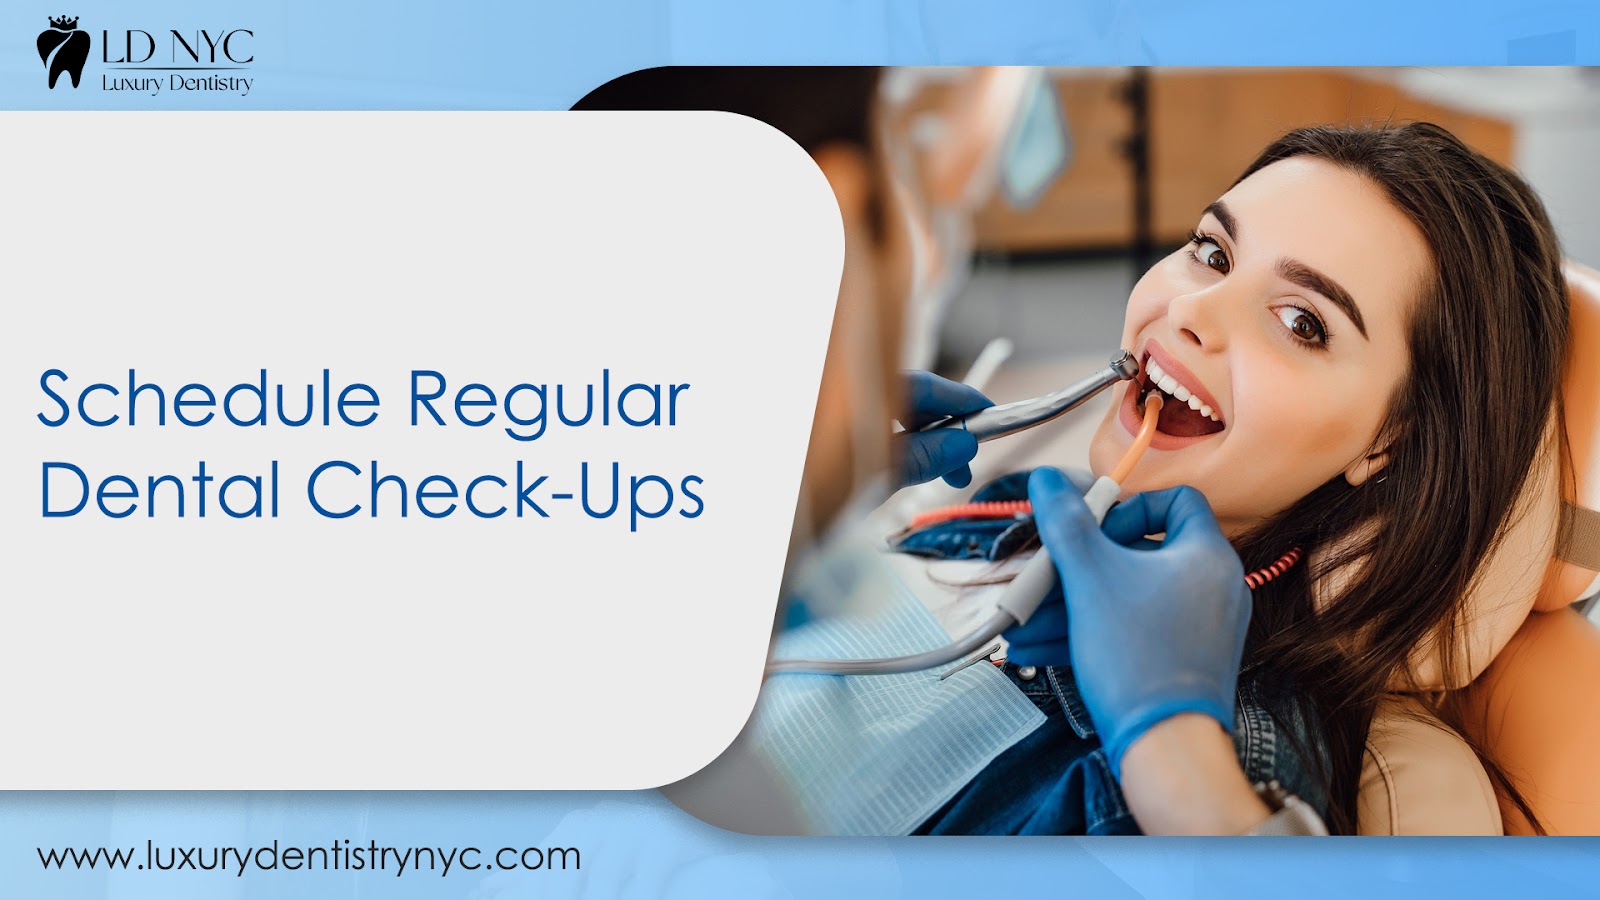 Schedule Regular Dental Check-Ups